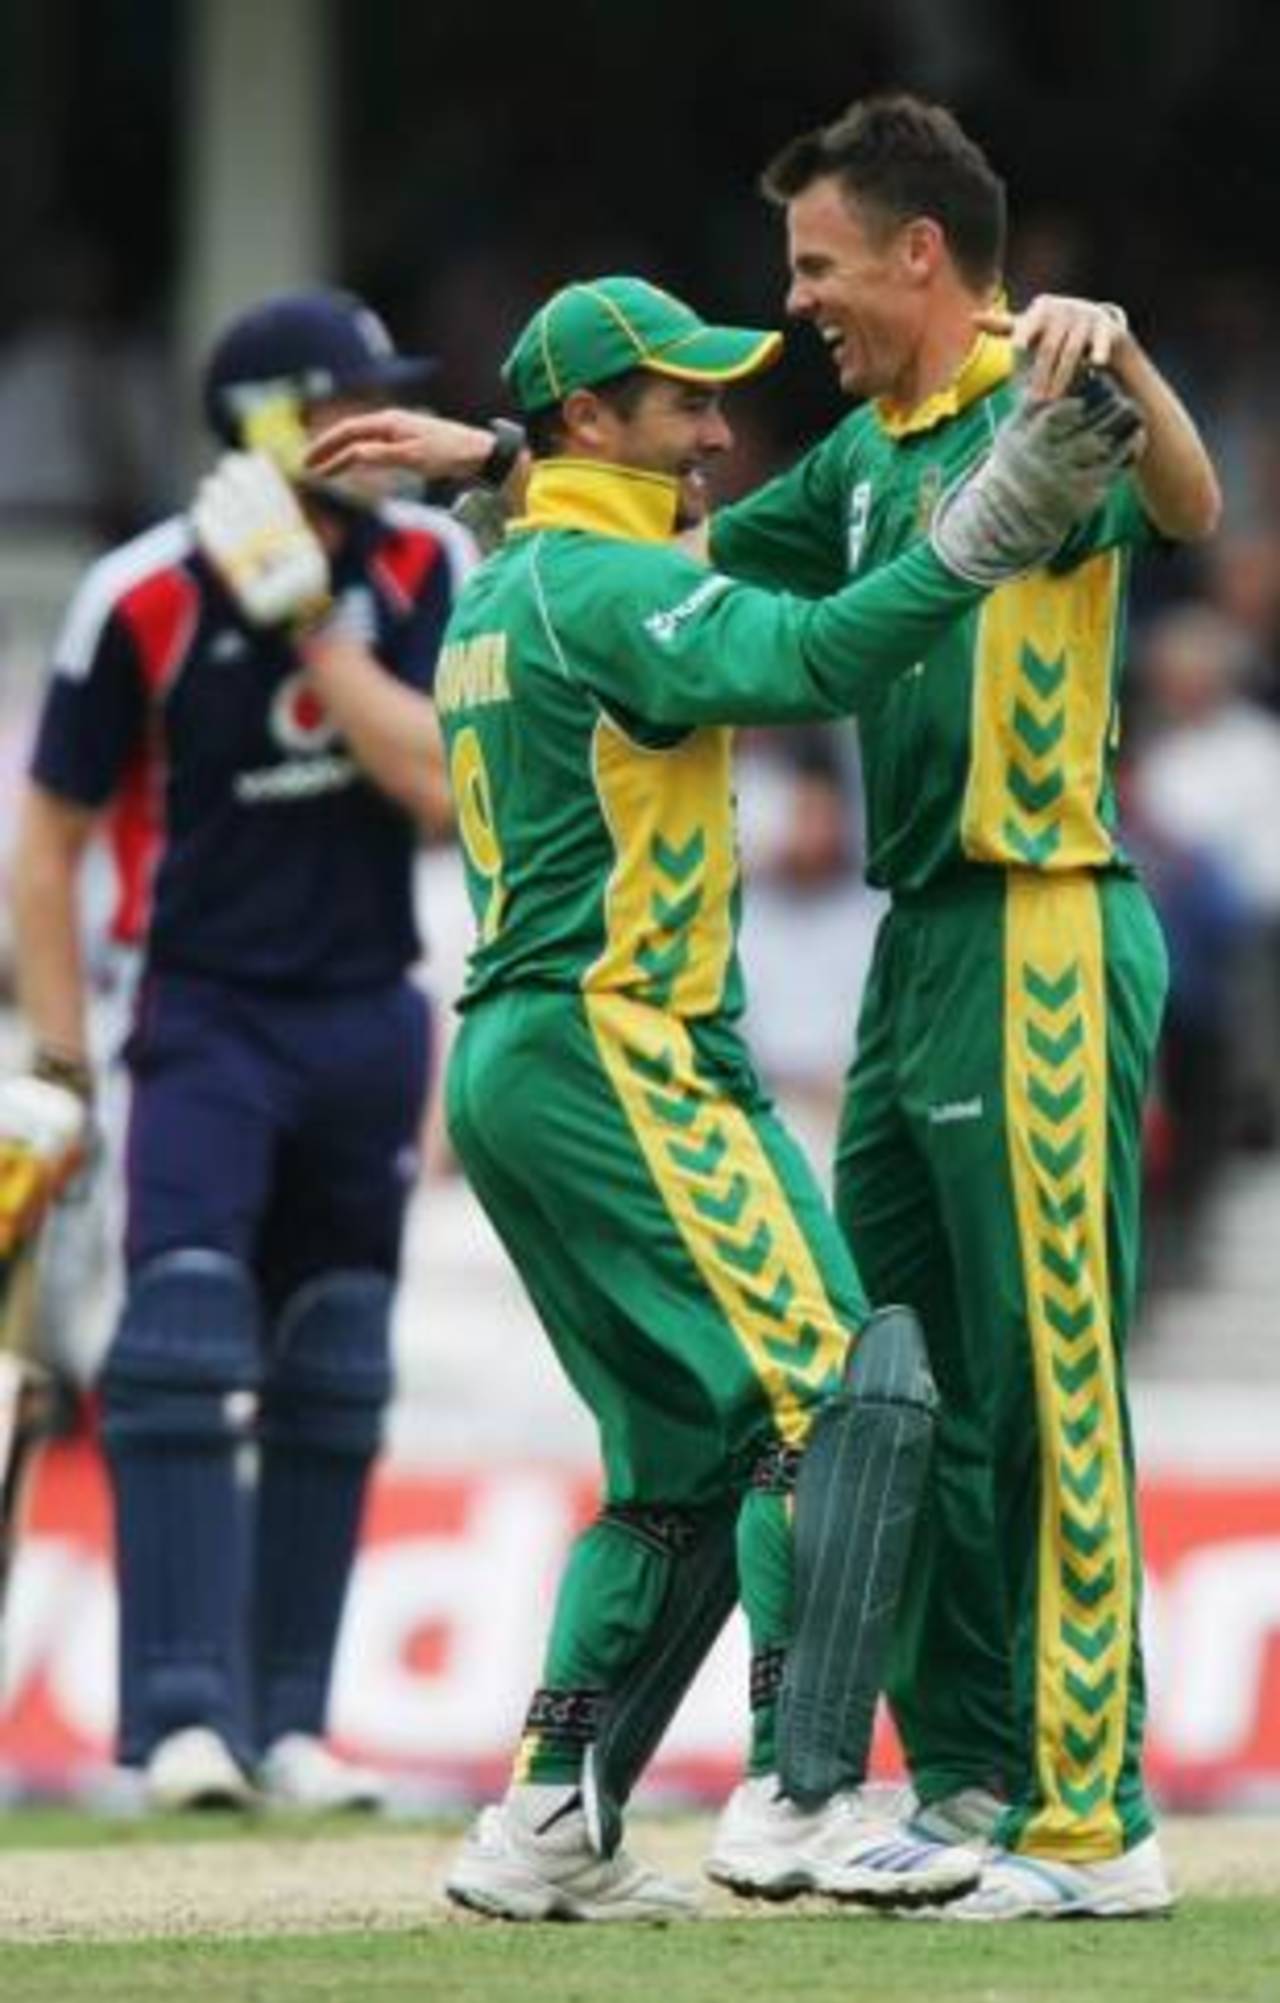 Johan Botha has been cleared to bowl at the World Twenty20&nbsp;&nbsp;&bull;&nbsp;&nbsp;Getty Images